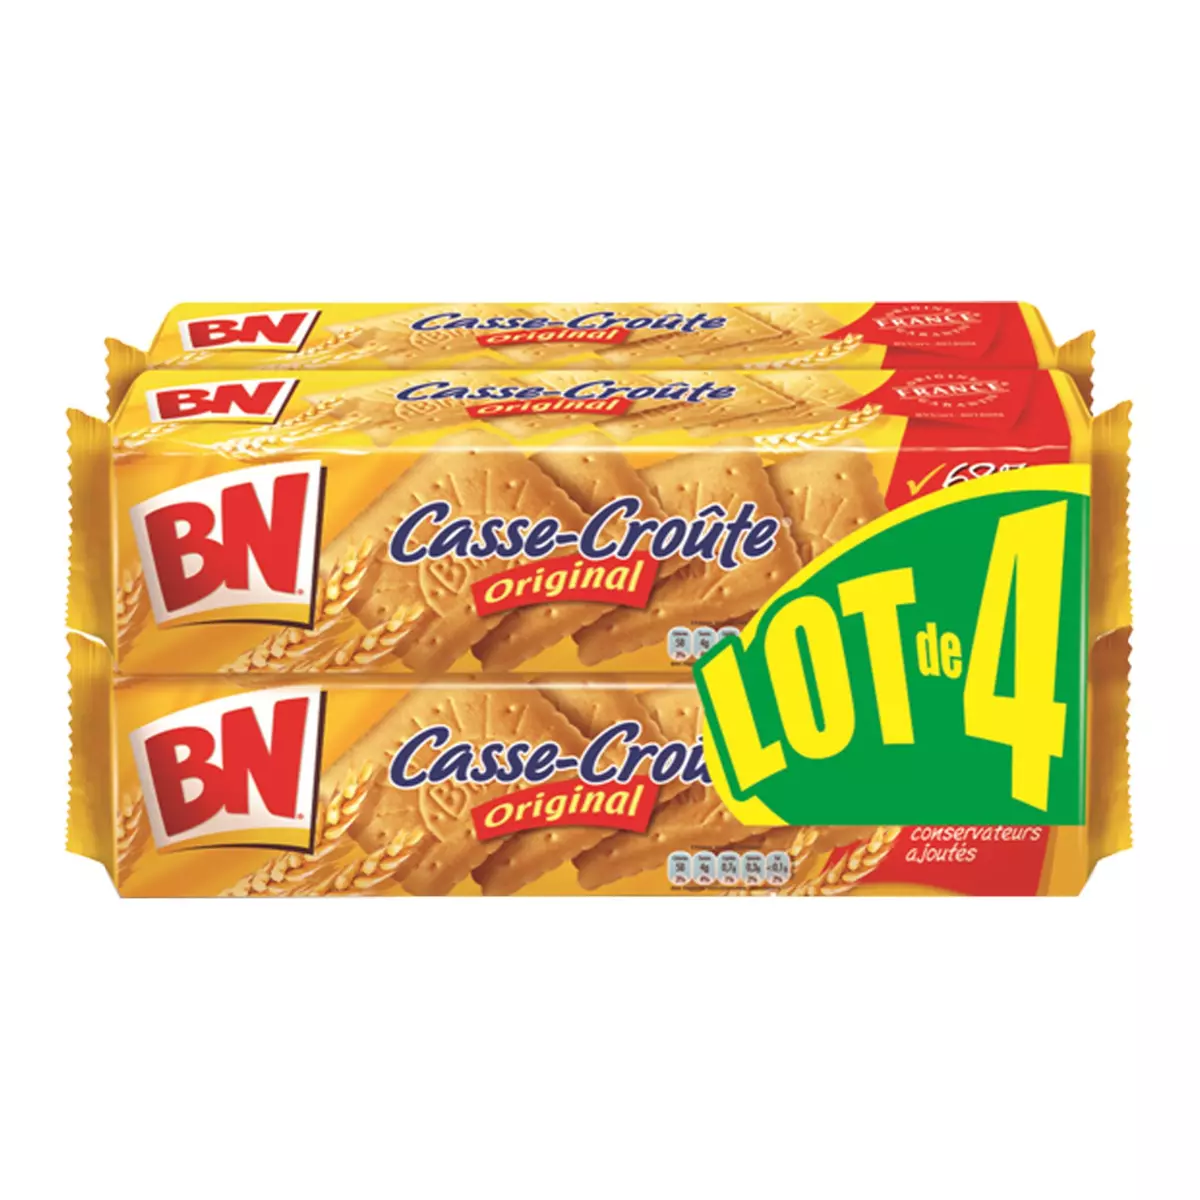 BN BN casse croute 4x375g -1,5kg